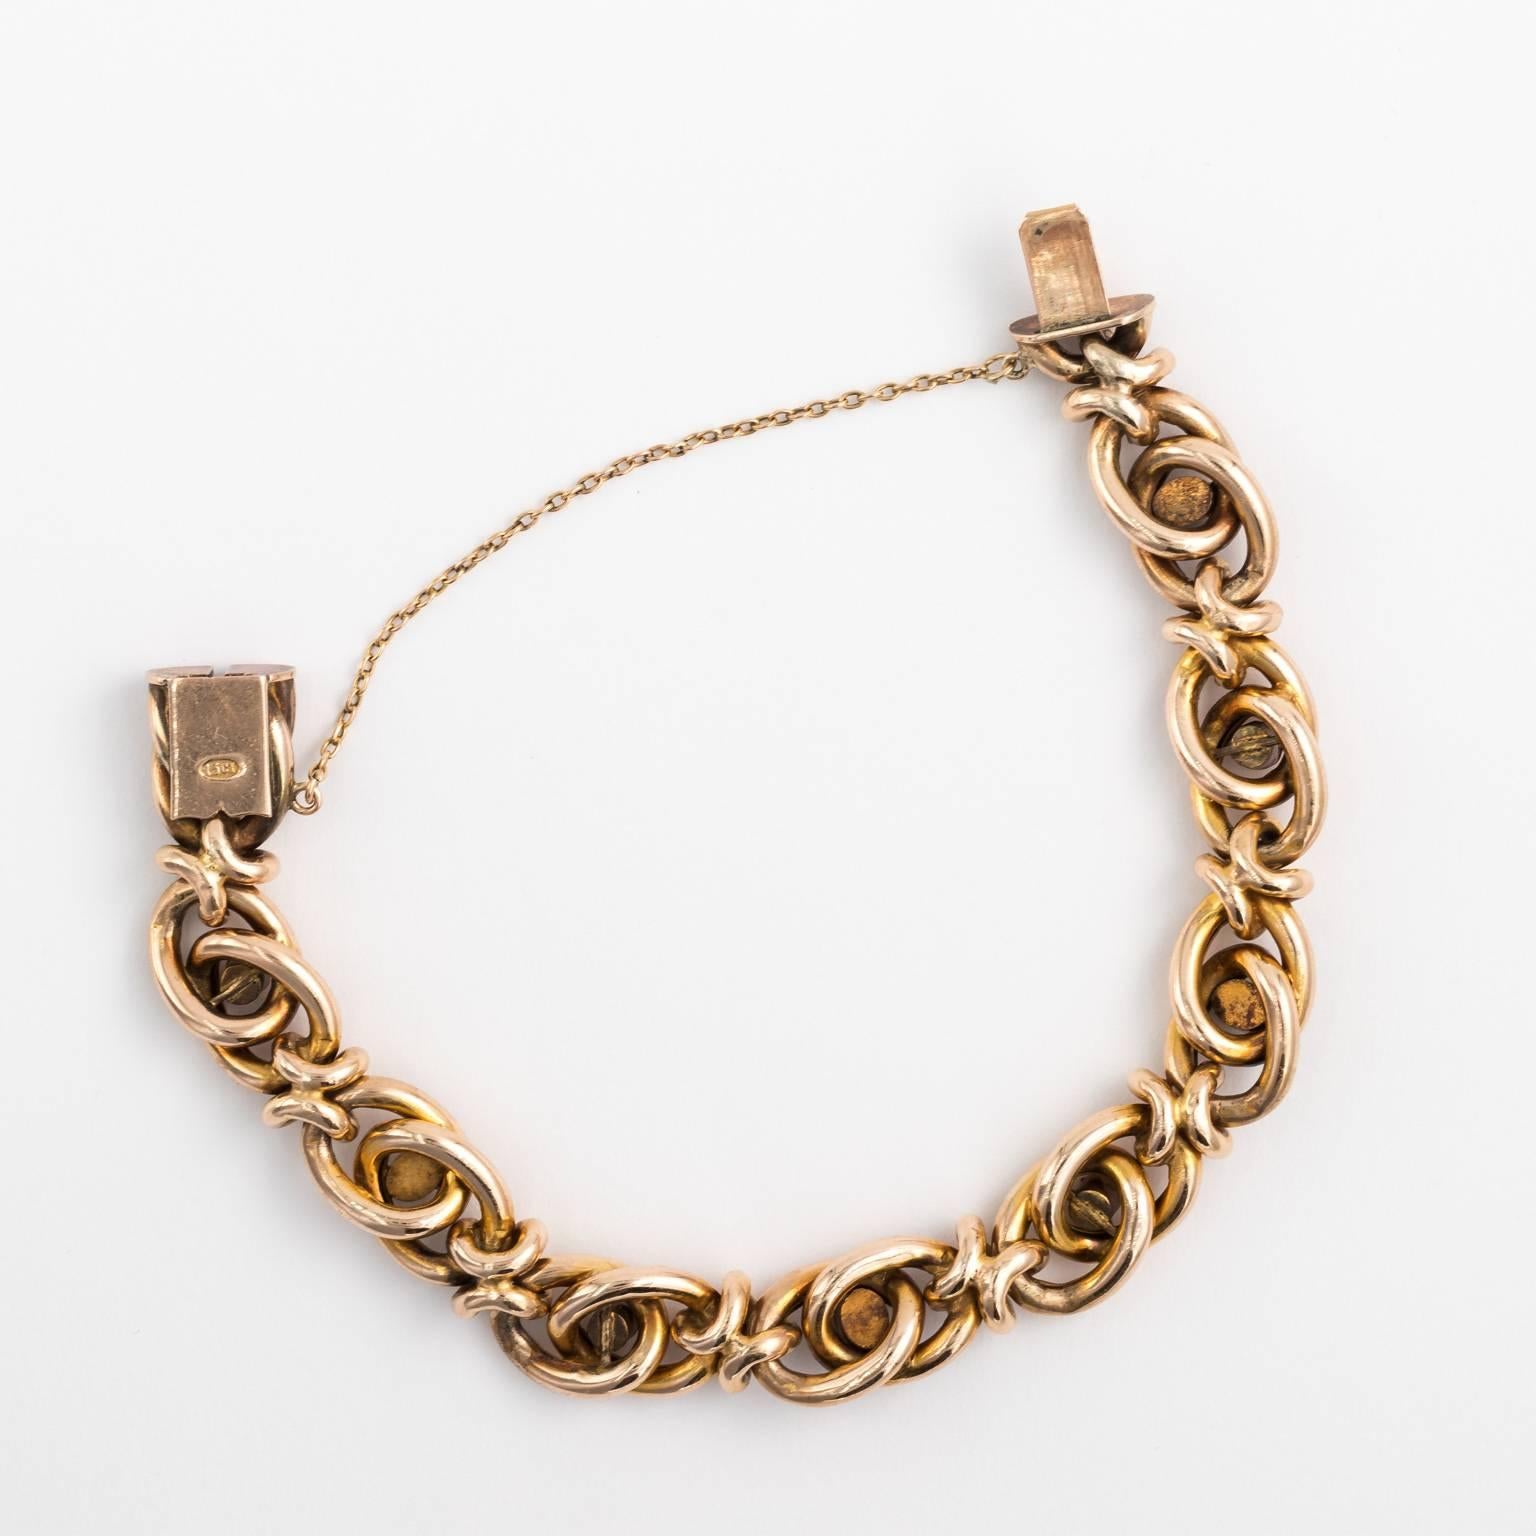 Circa late 19th century 15 karat gold link bracelet.
